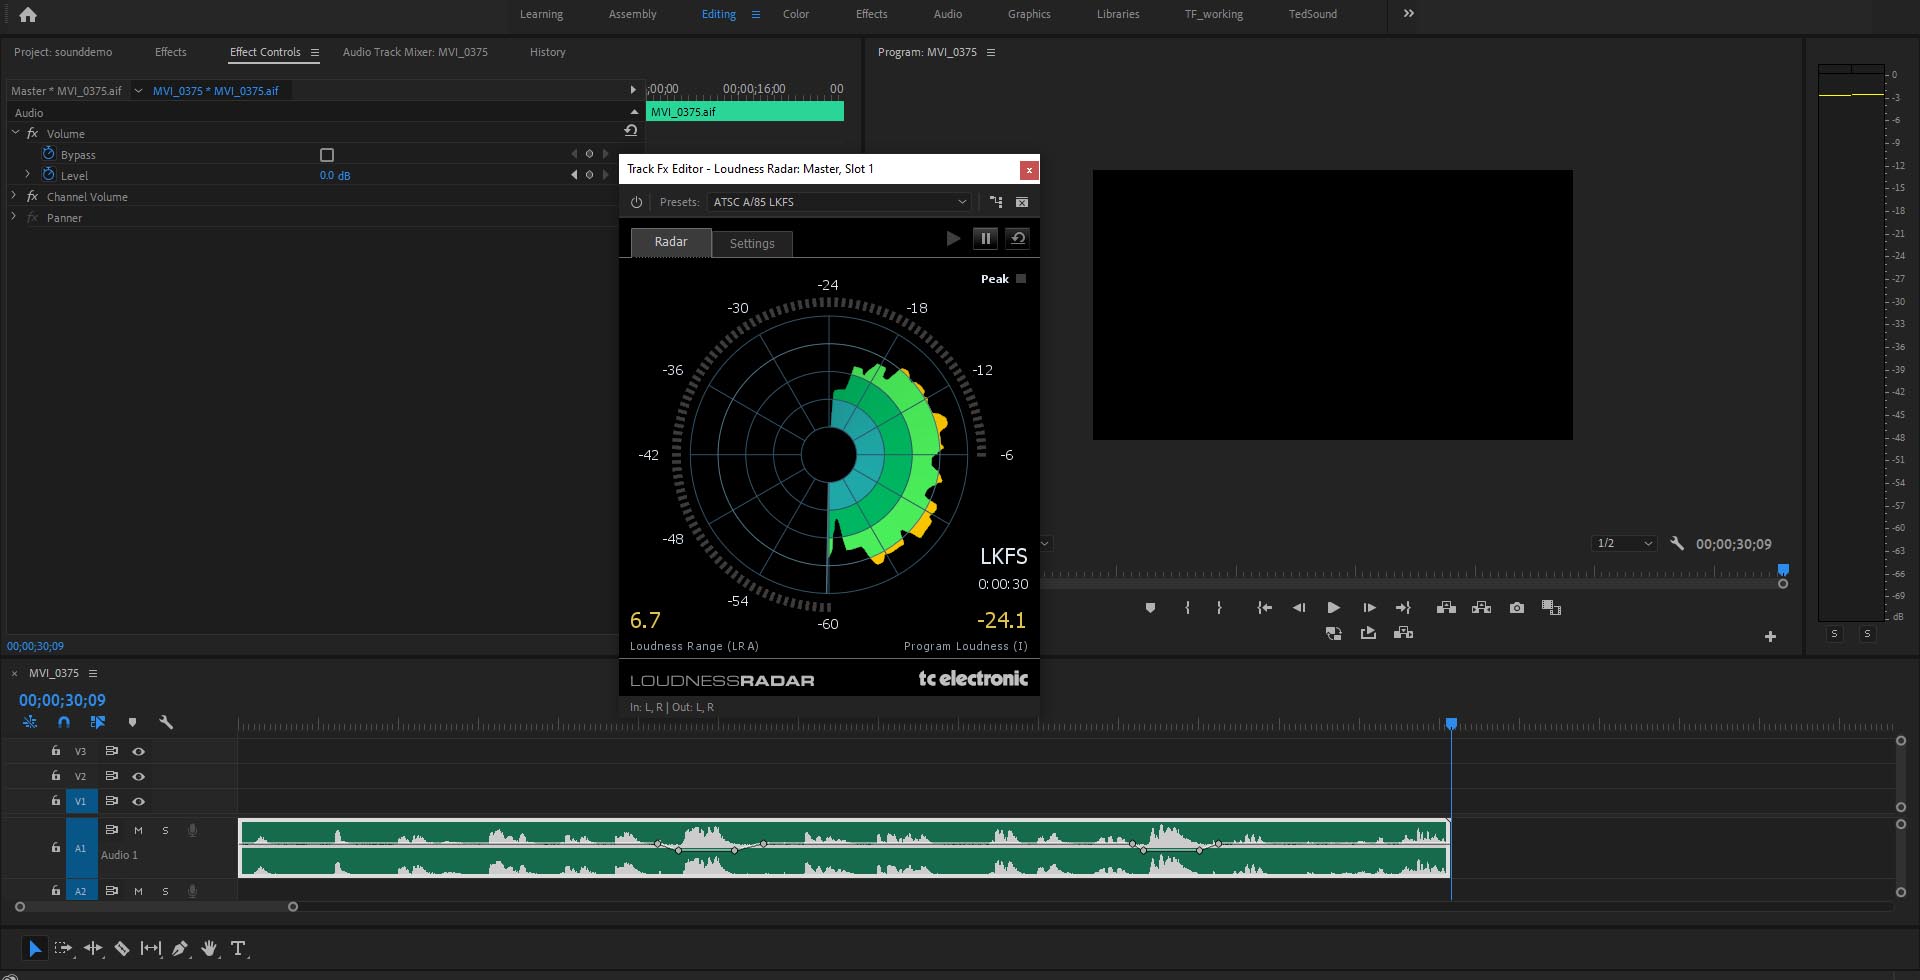 Figure 3. The Loudness Radar in Adobe Premiere.